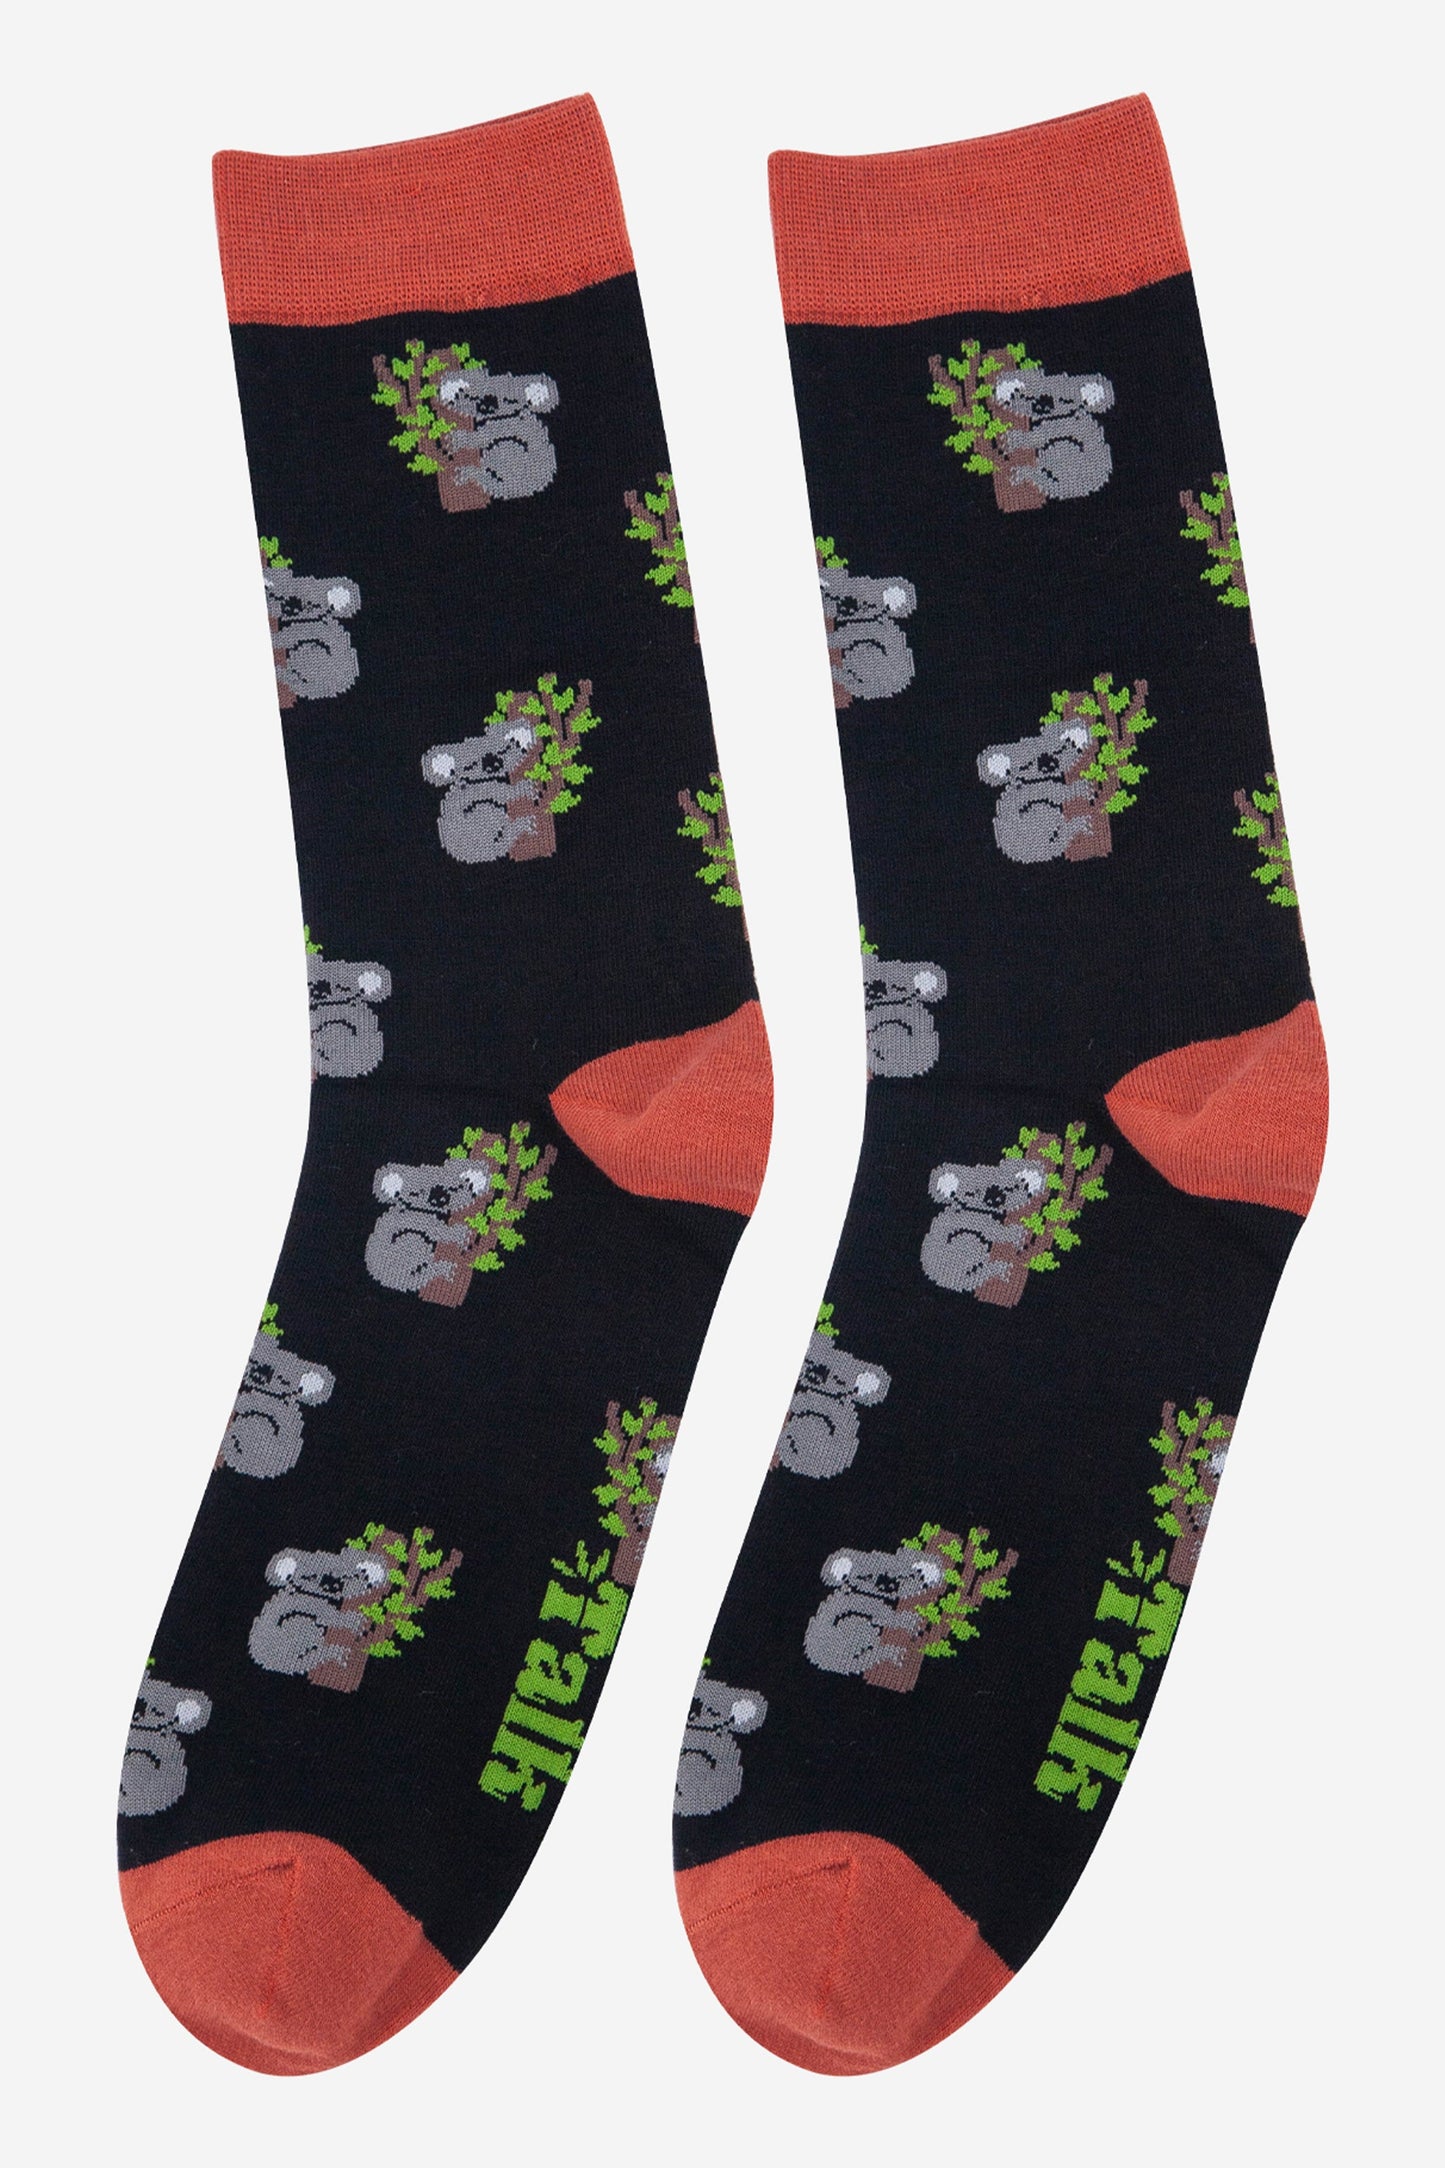 mens black koala bamboo socks, featuring grey koala bears sleeping in trees